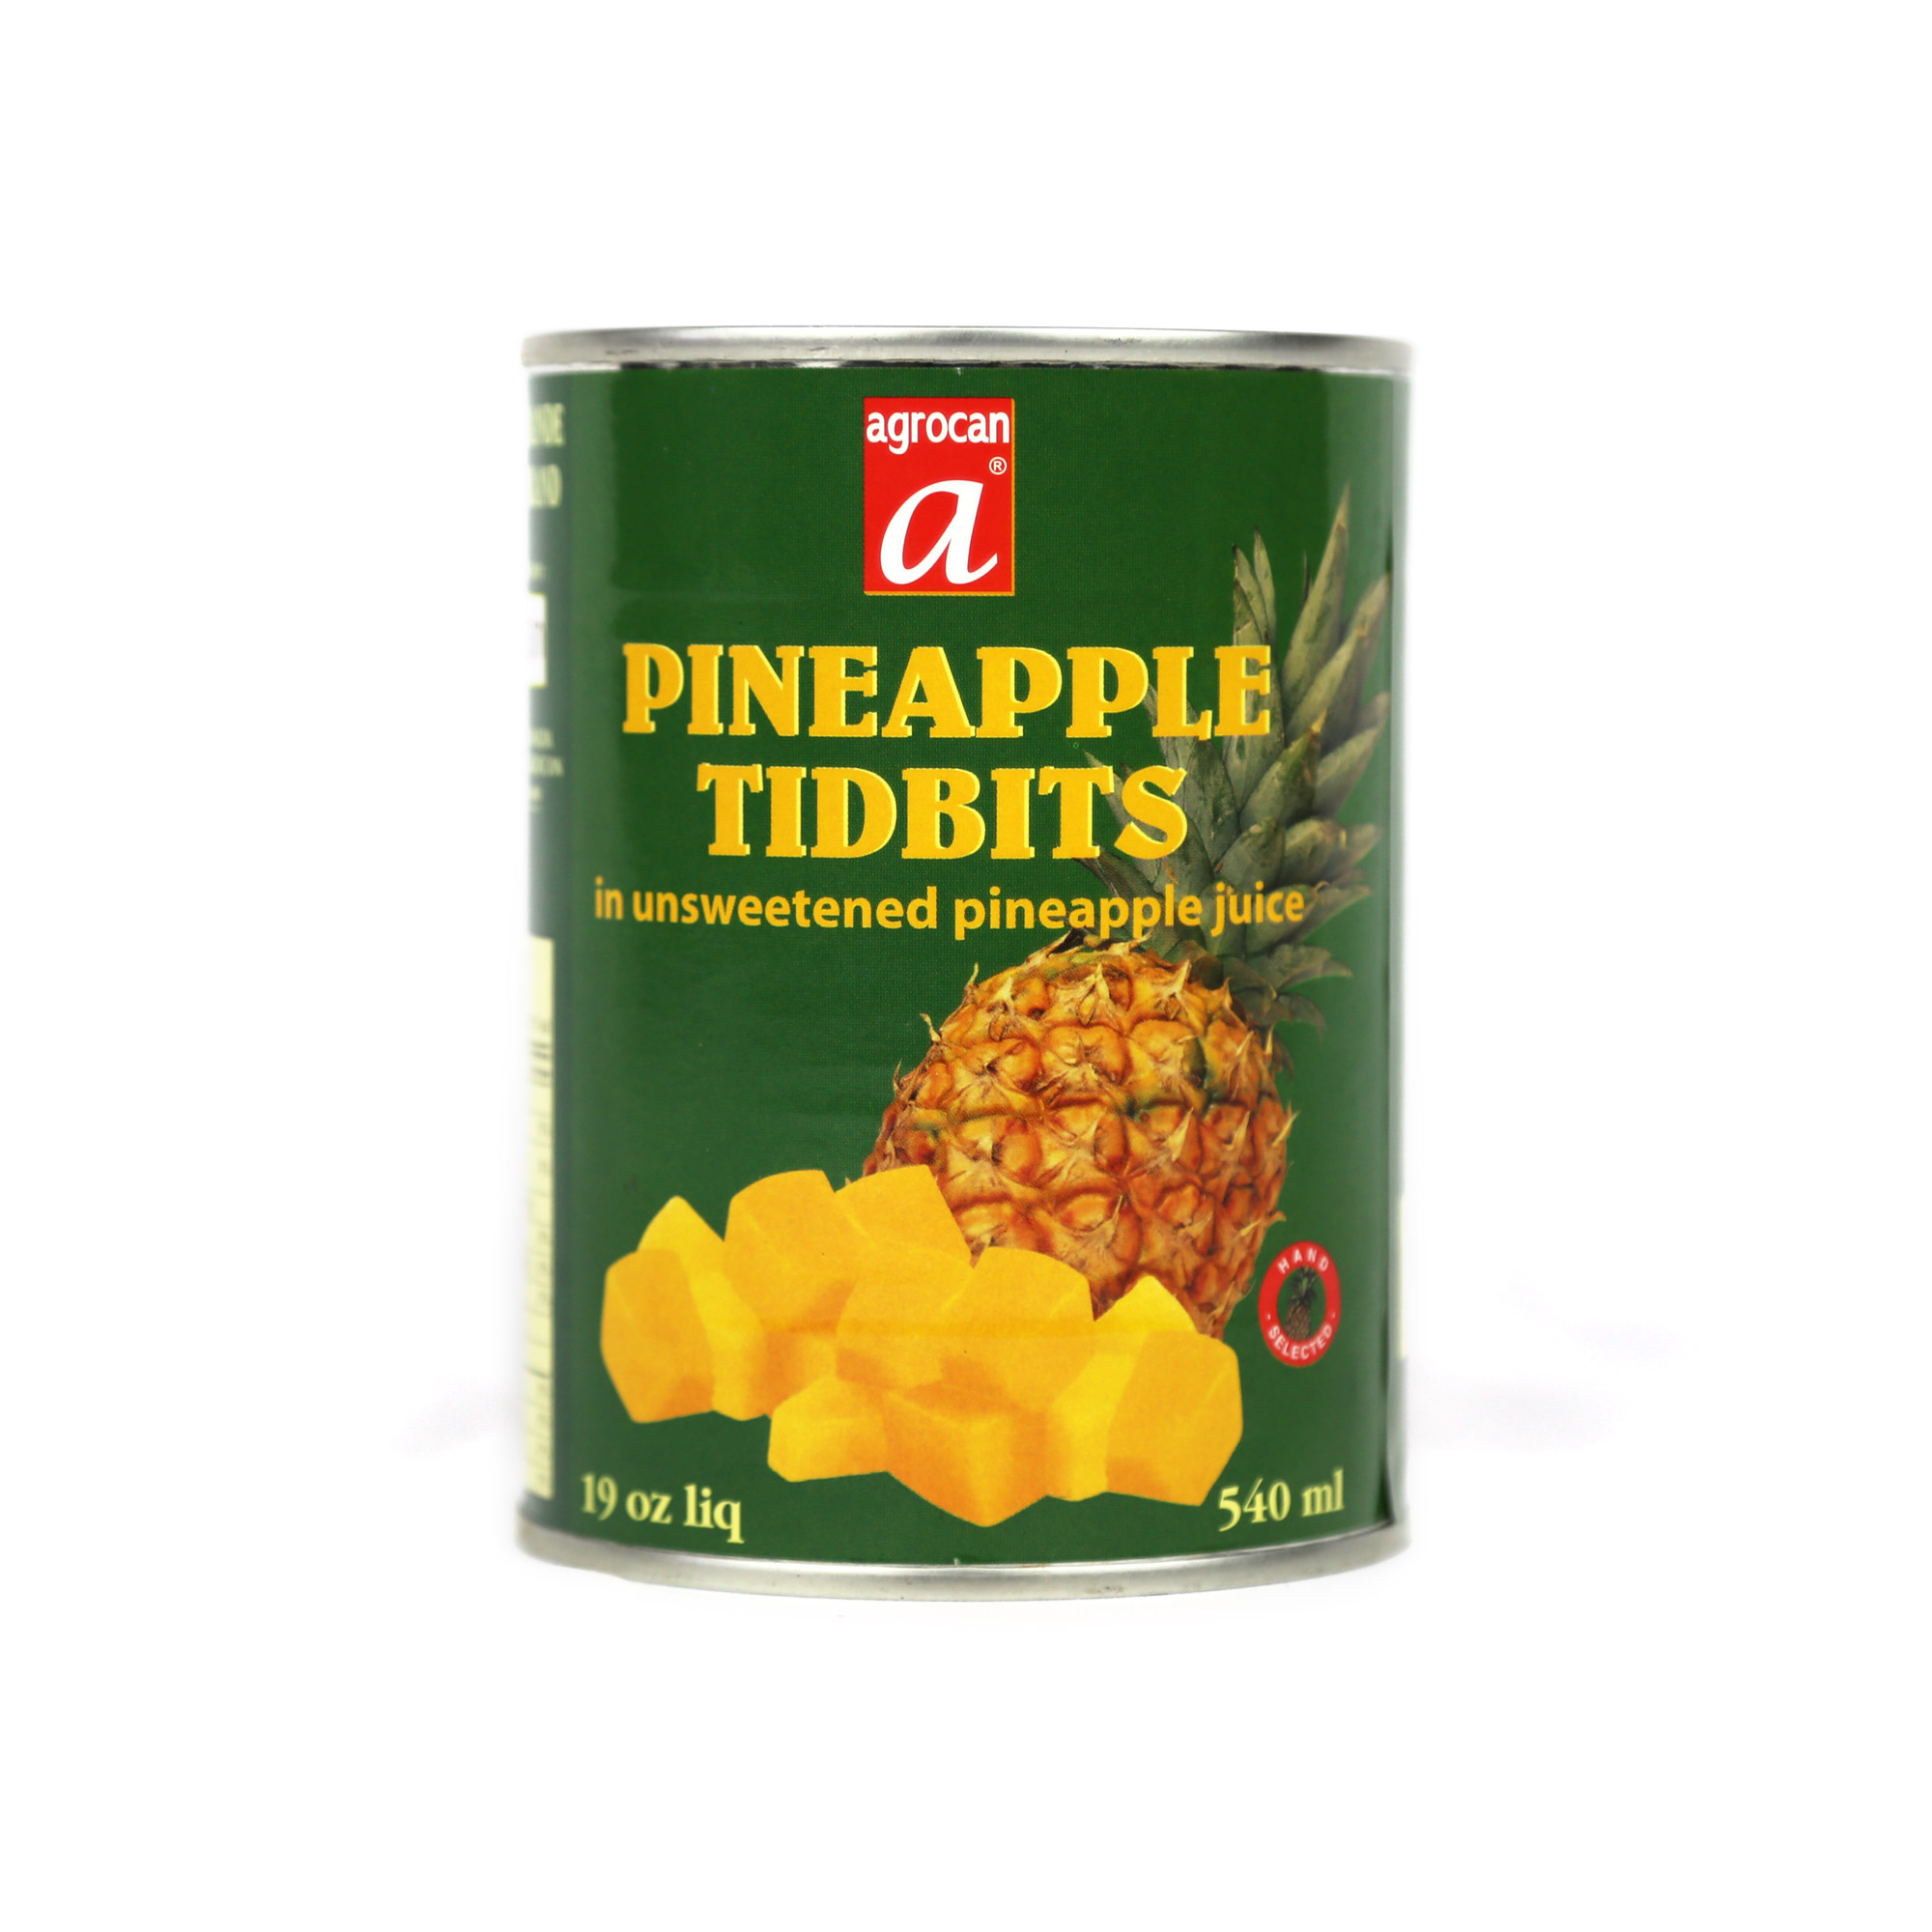 Pineapple tidbits – 540ml